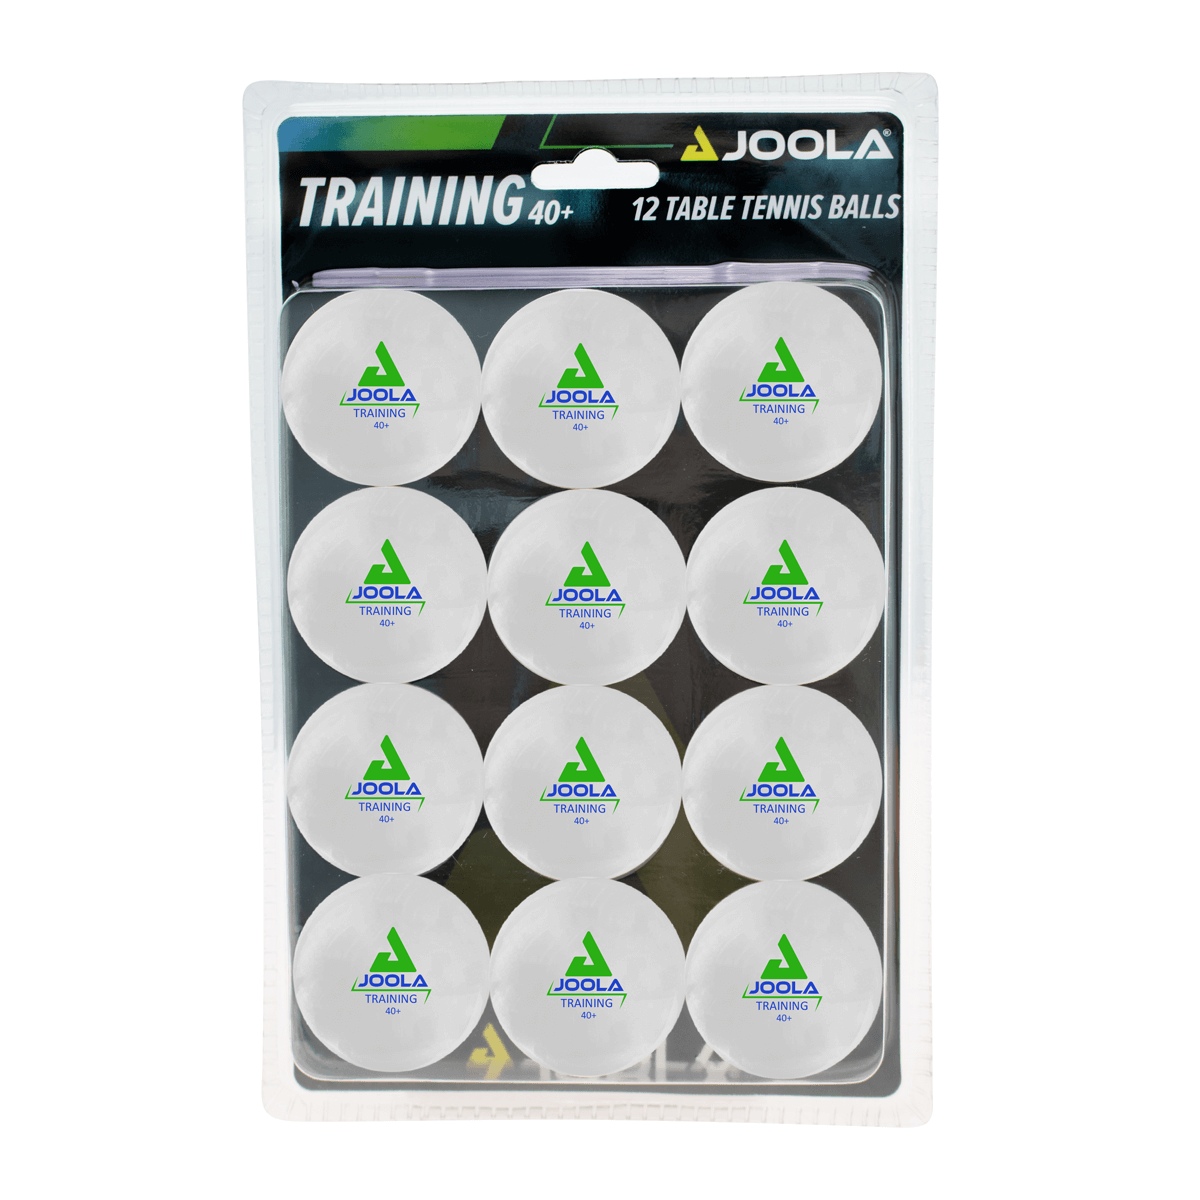 JOOLA White 3-Star Training Table Tennis Balls (12 Pack)